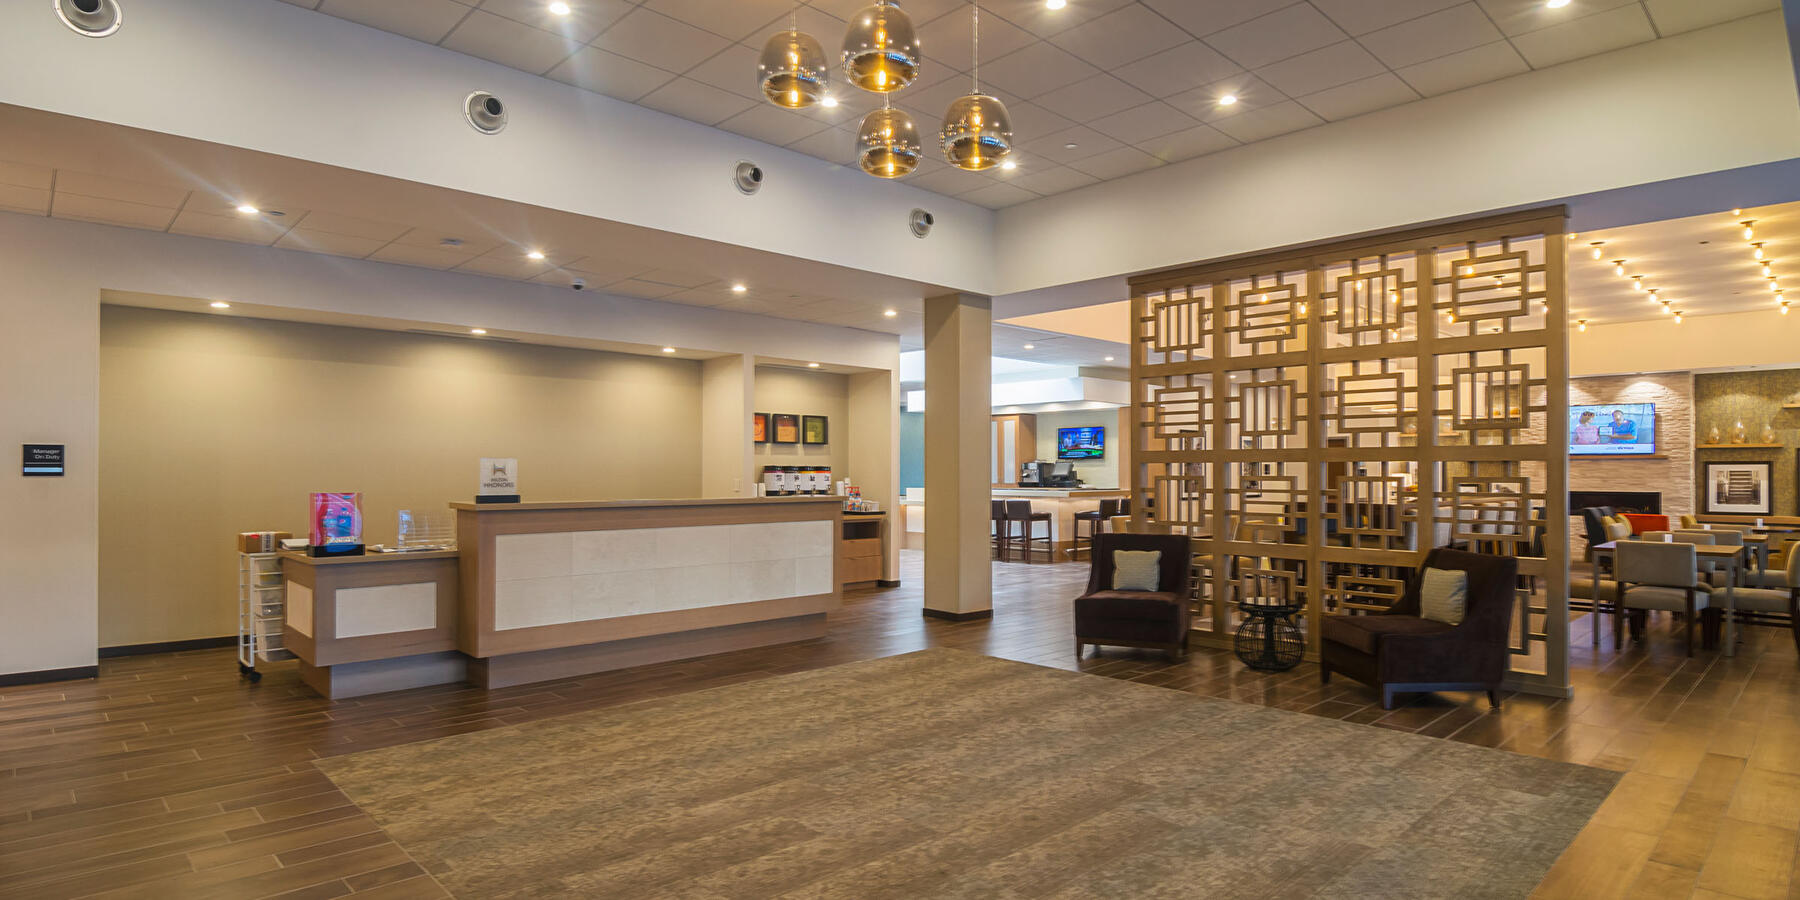 Hospitality Construction Companies - Hampton Inn Loyola lobby with front desk and dining area